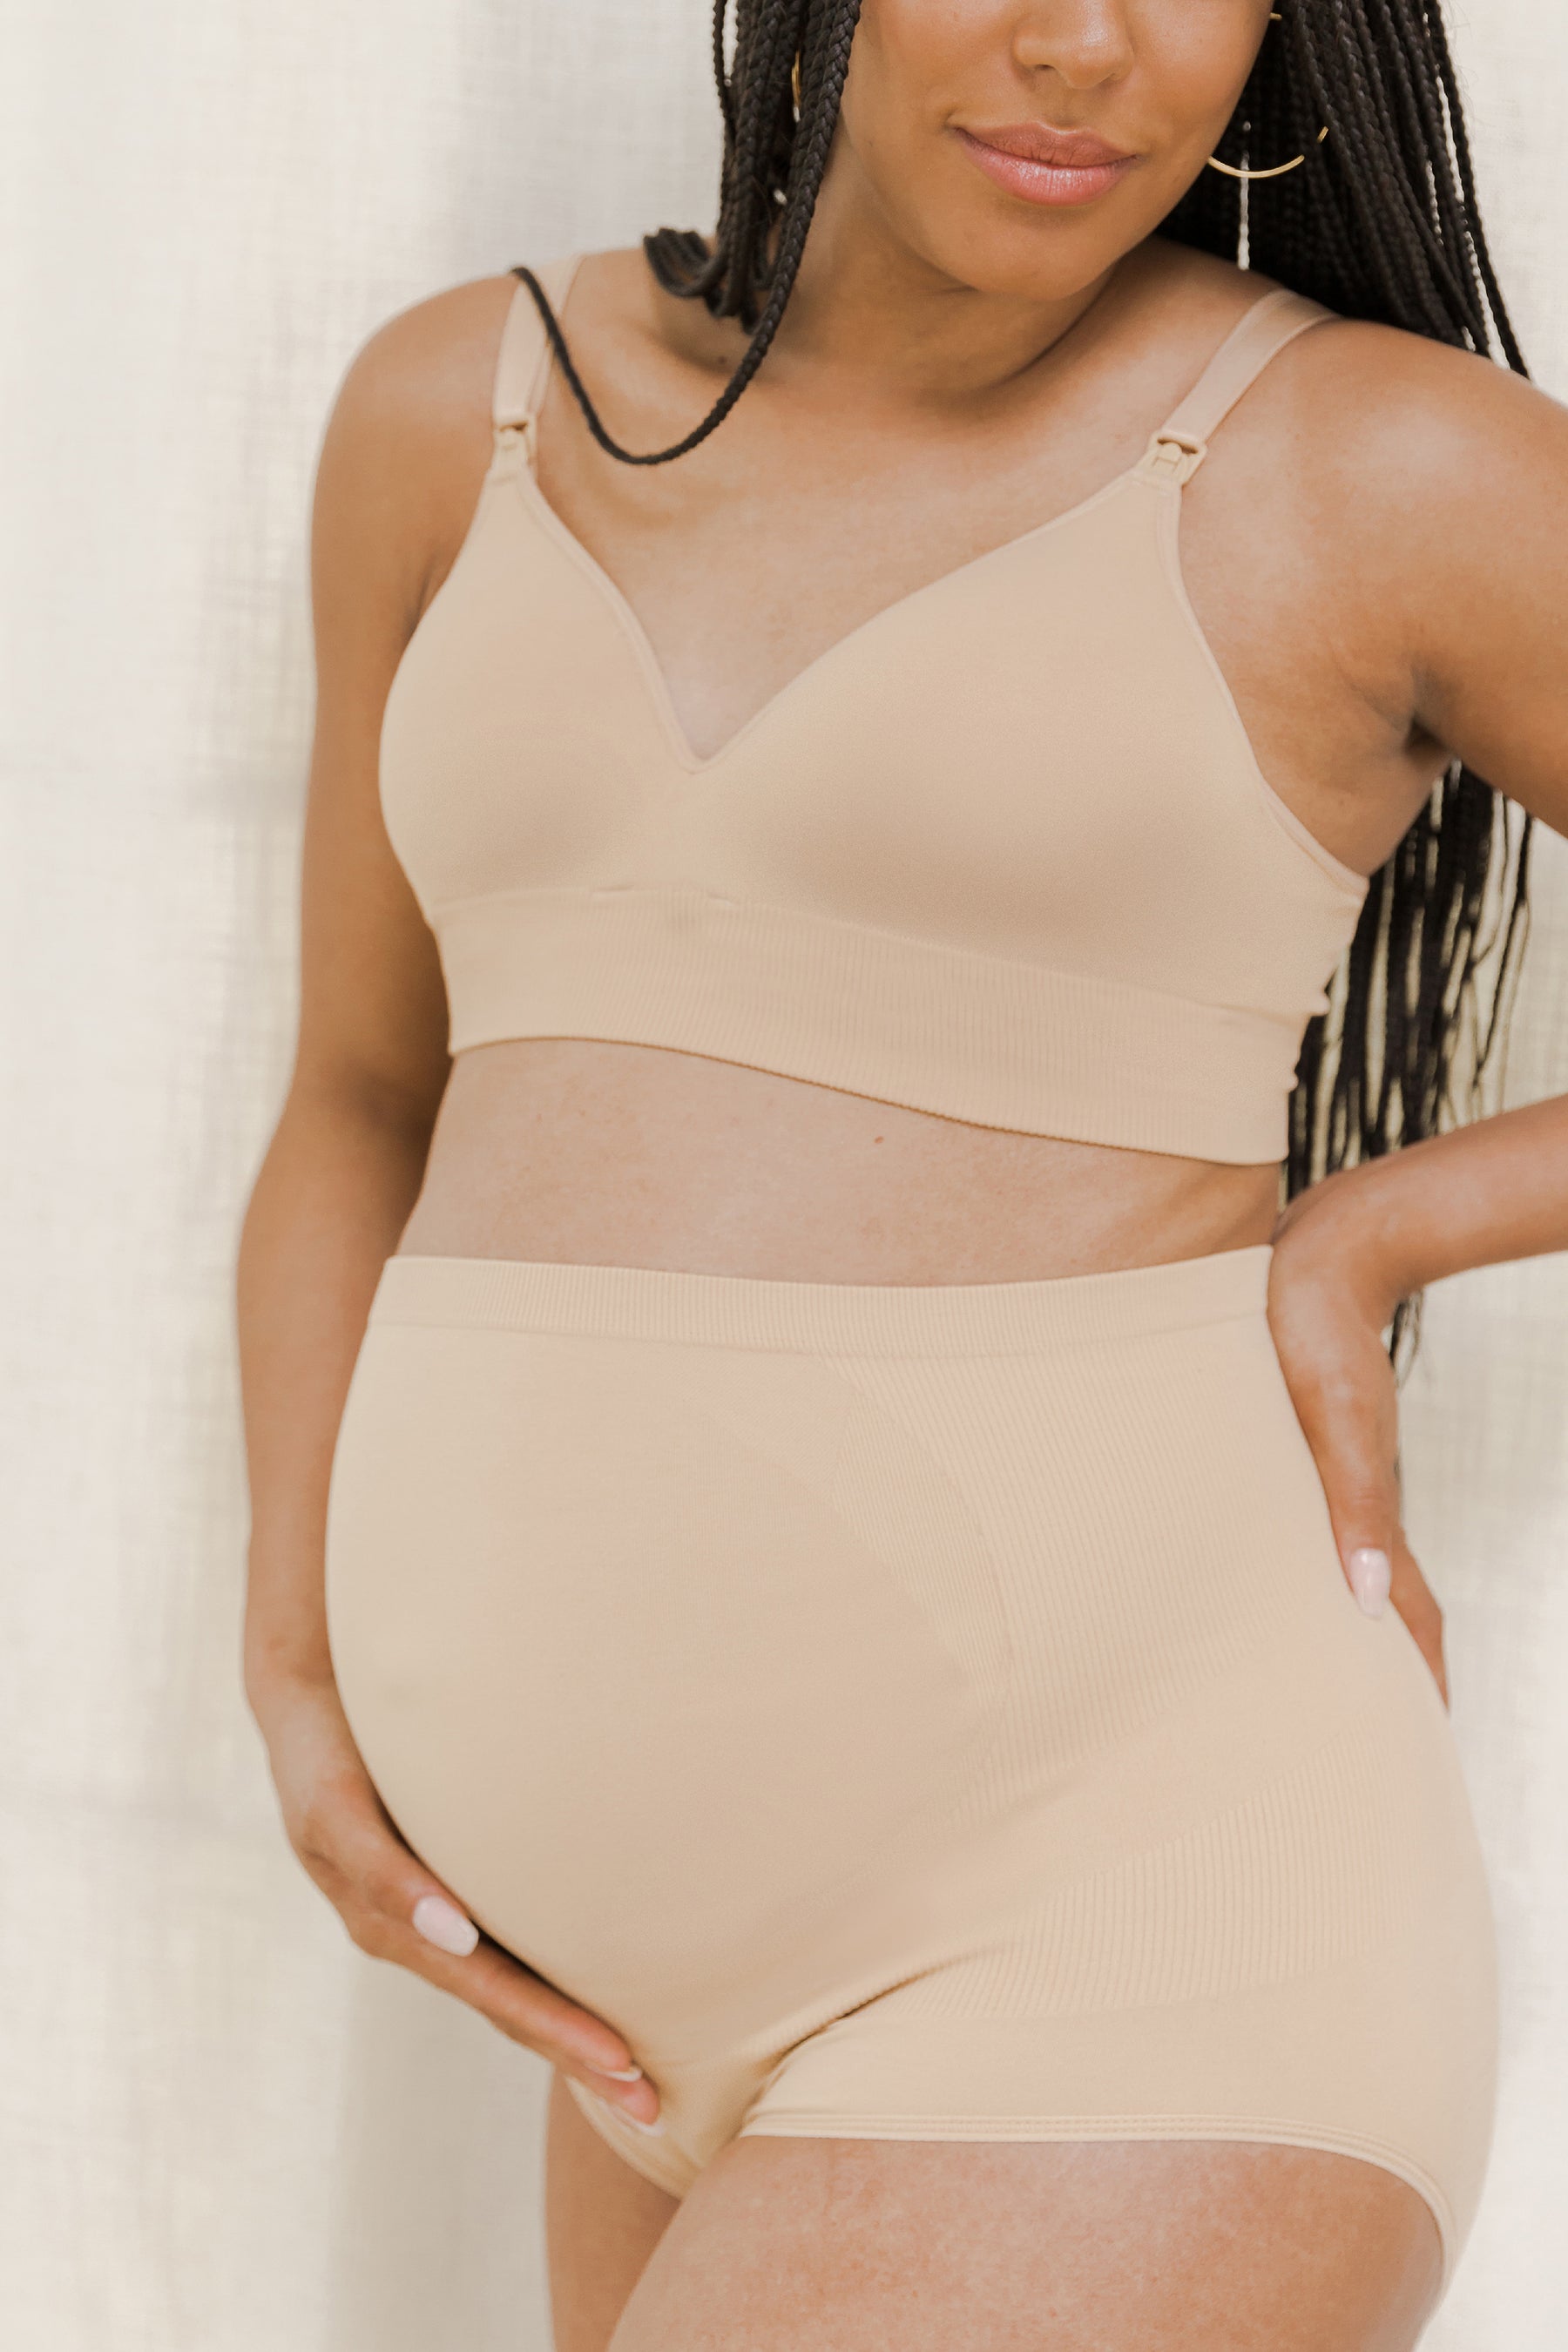 Shapee iNVI Women's Maternity Briefs Panties